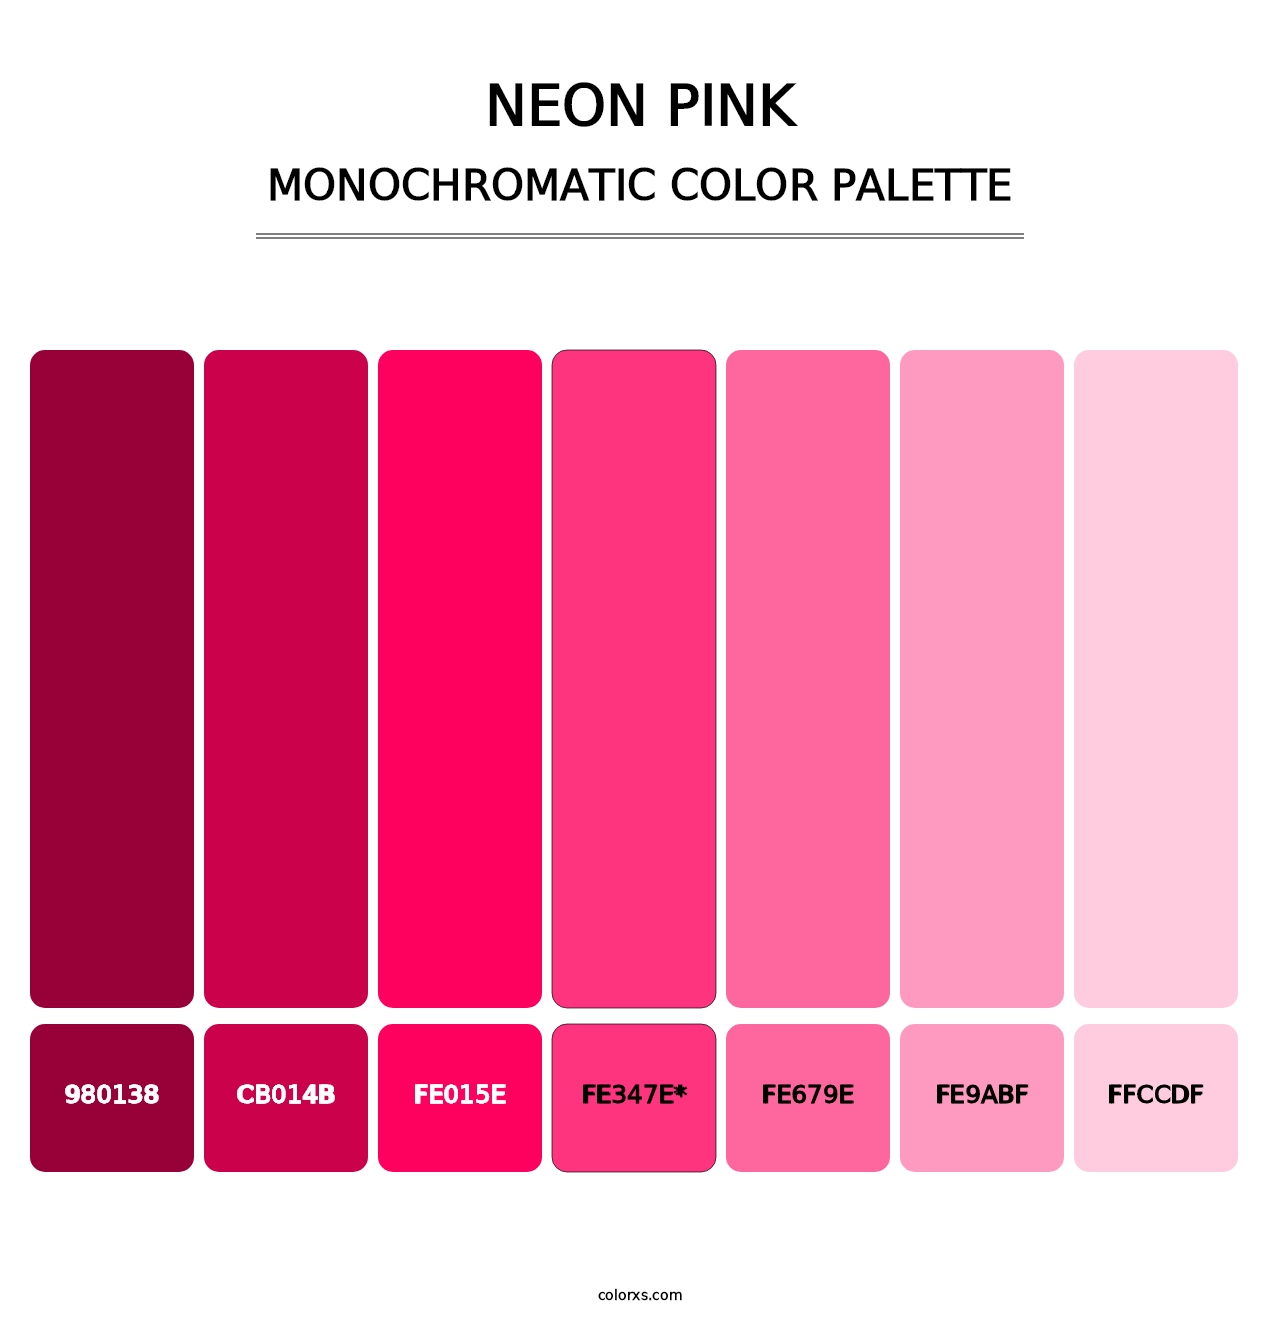 Neon Pink - Monochromatic Color Palette